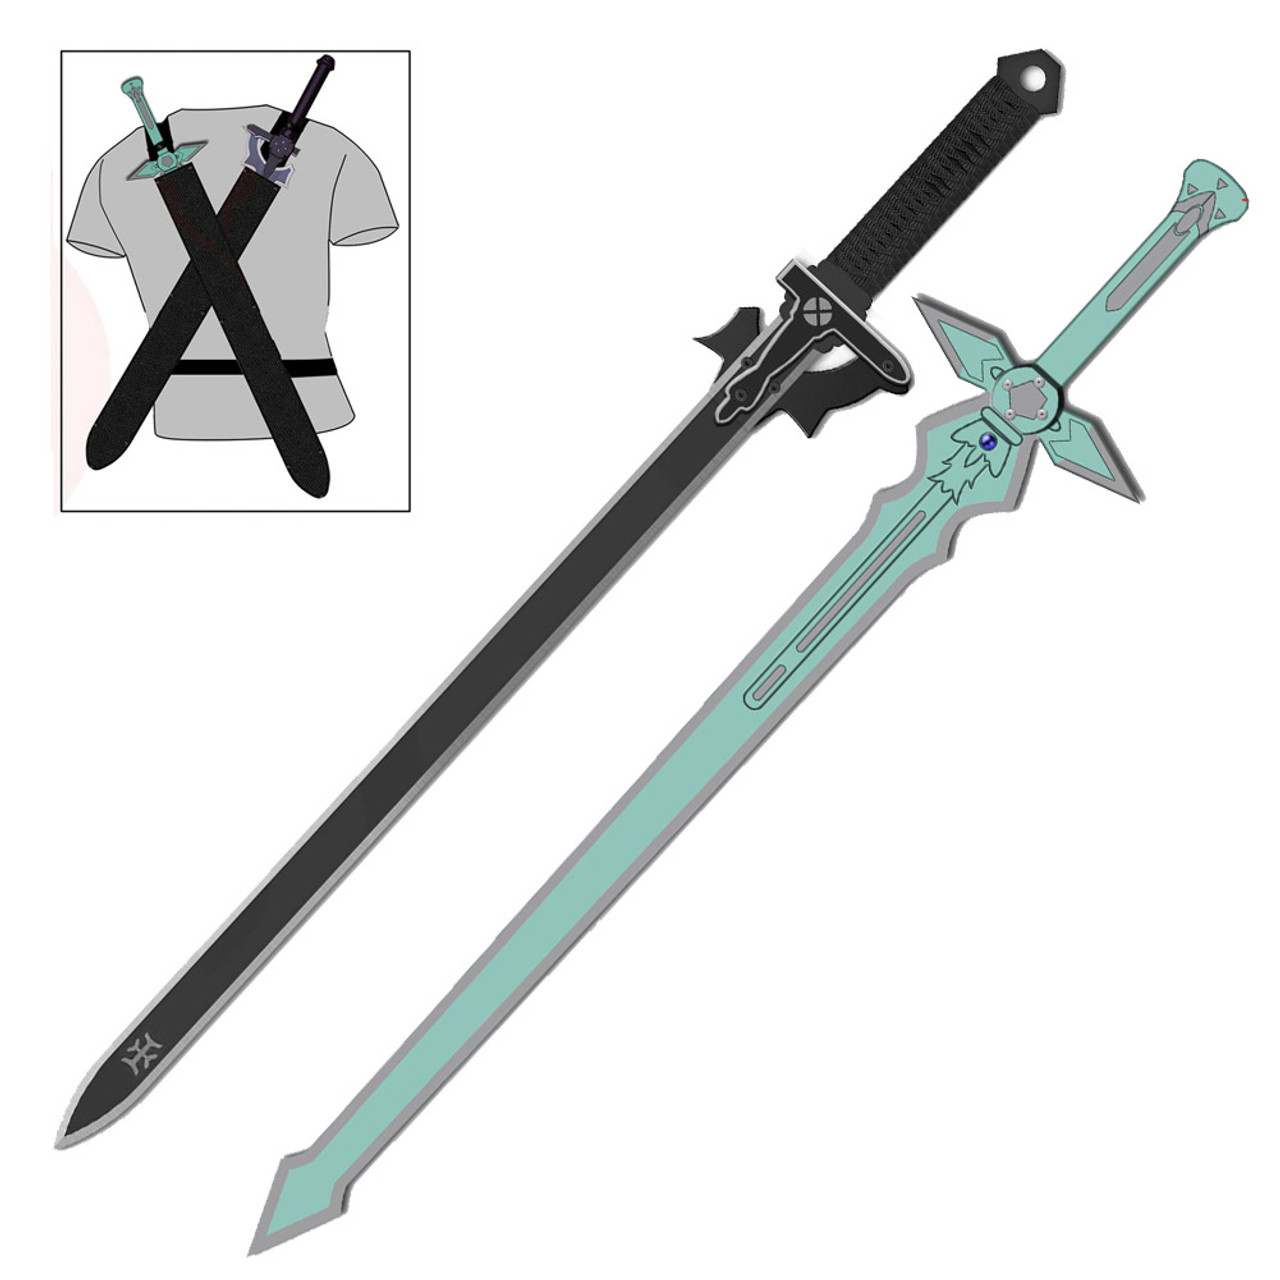 Imagine how op Triple dark blade will be #rework #darkblade #swordrewo